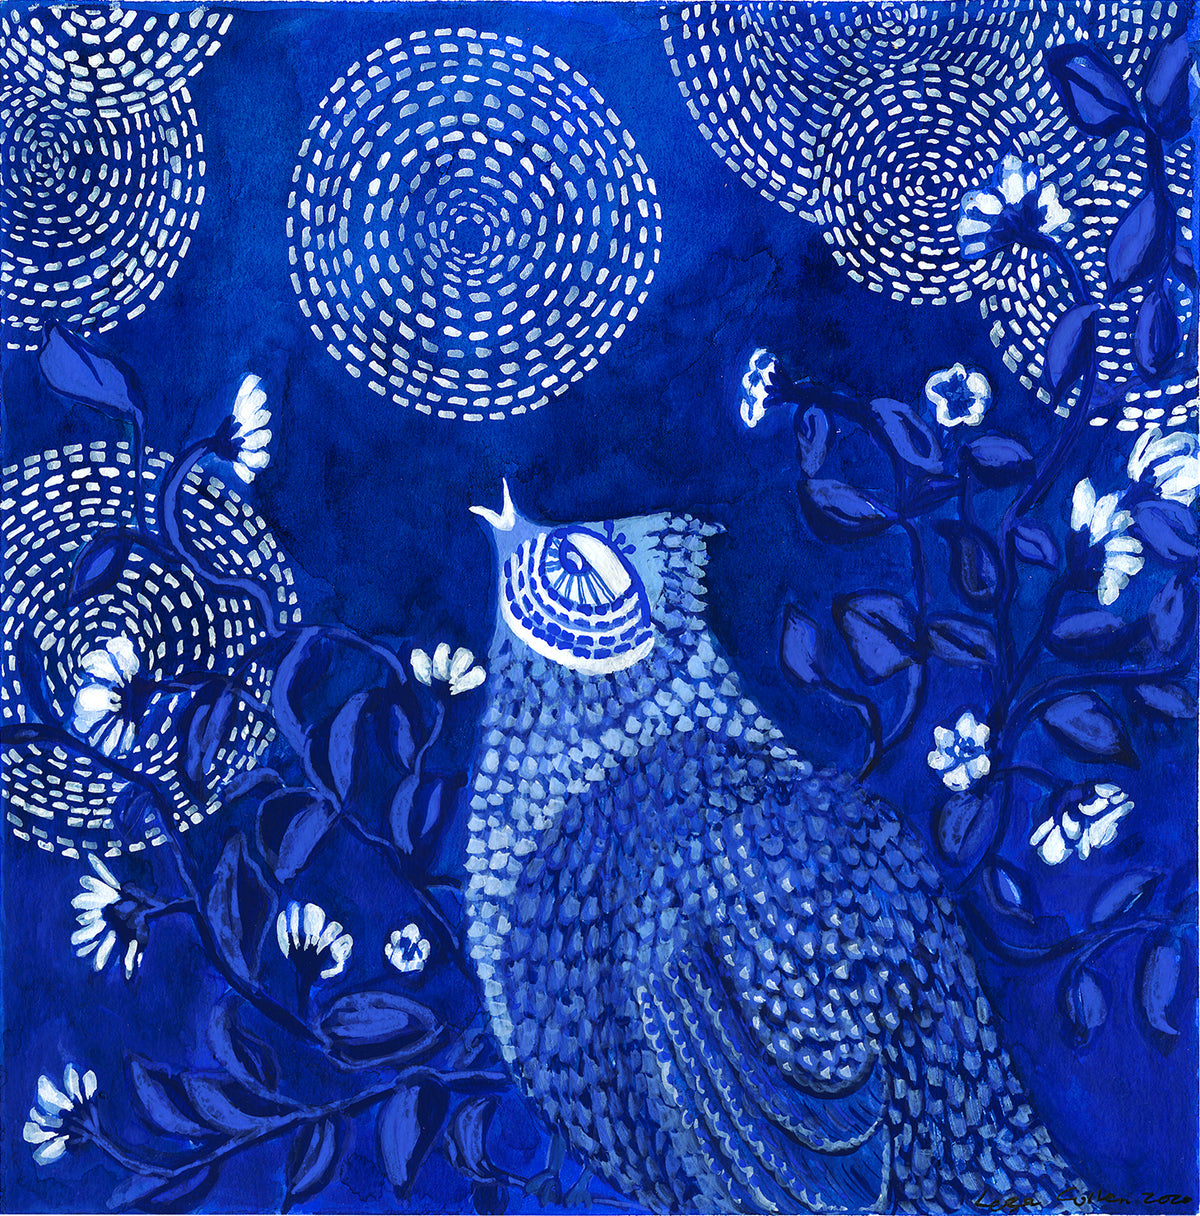 Blue Moon Series - Nightingale Serenades The Night